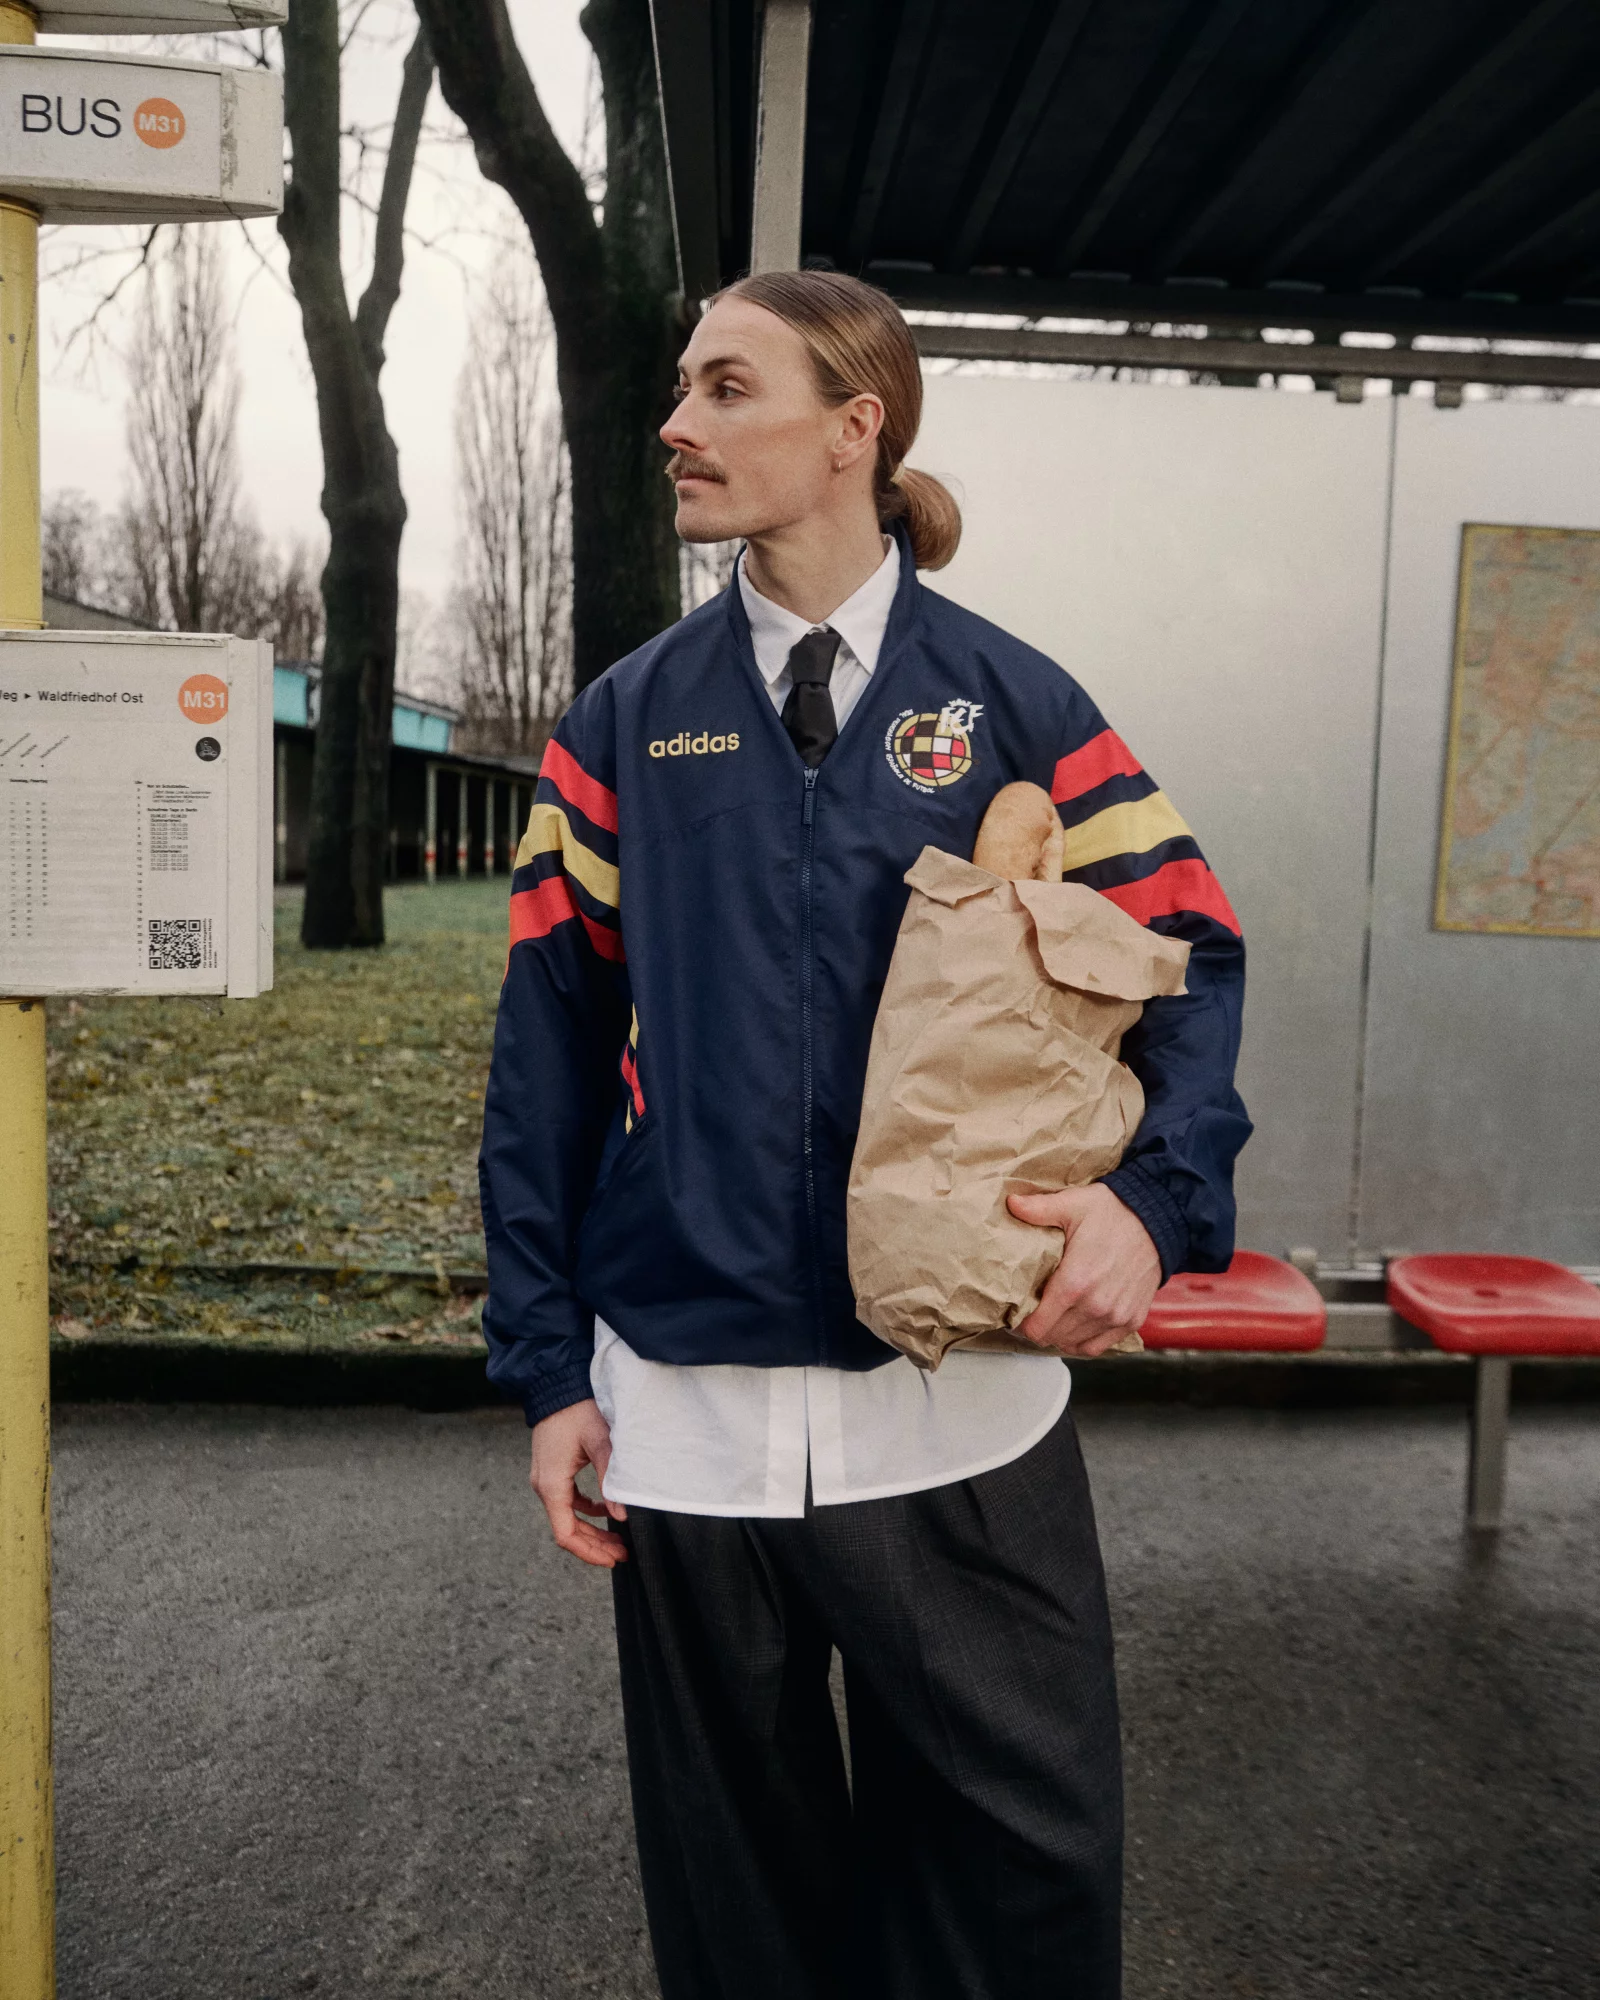 Adidas Bring Back Campaign 7 by Carina DEWHURST